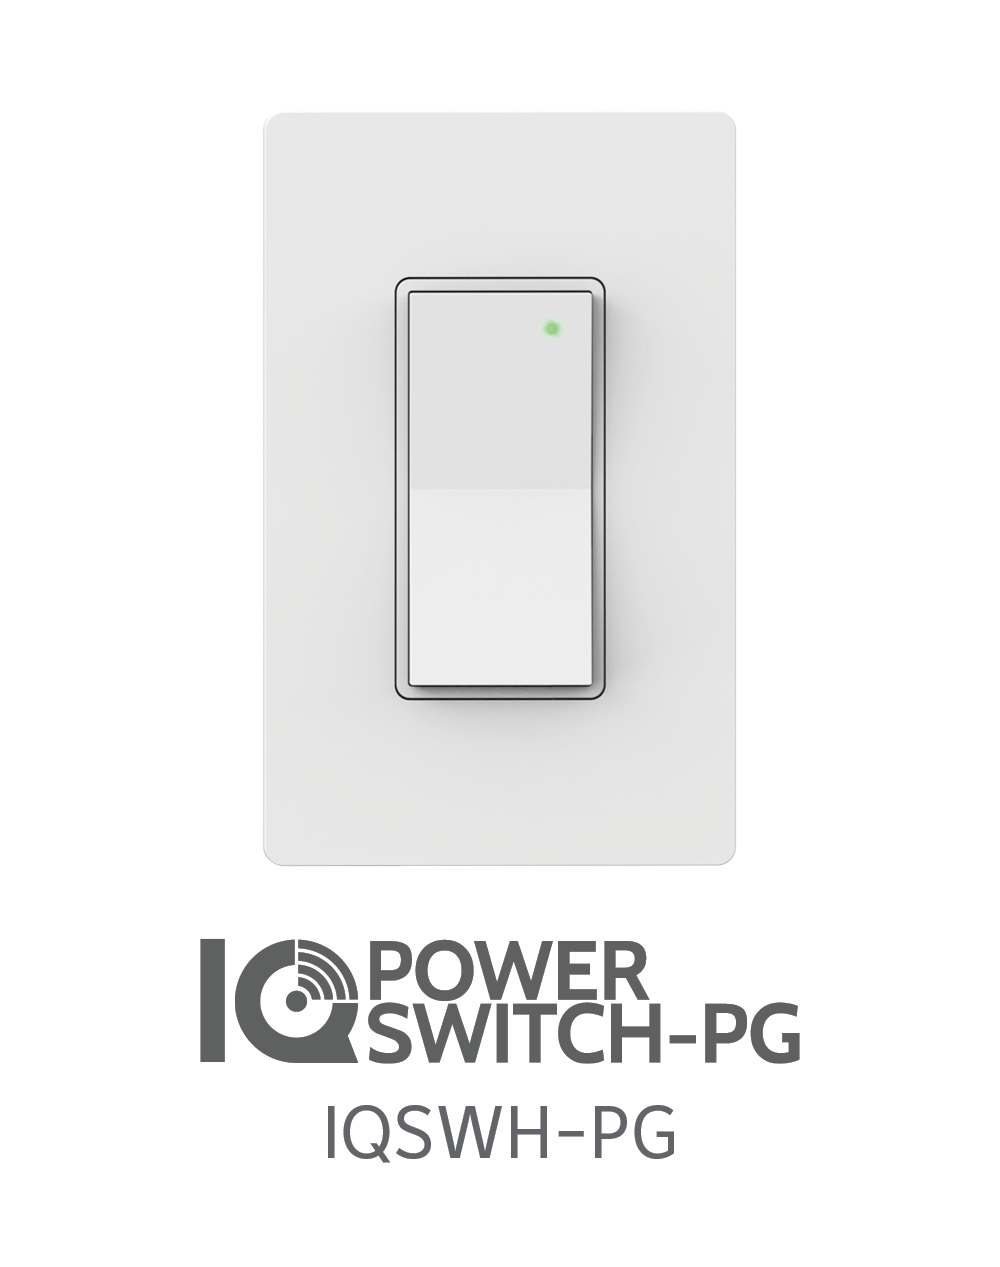 IQ Power Switch-PG